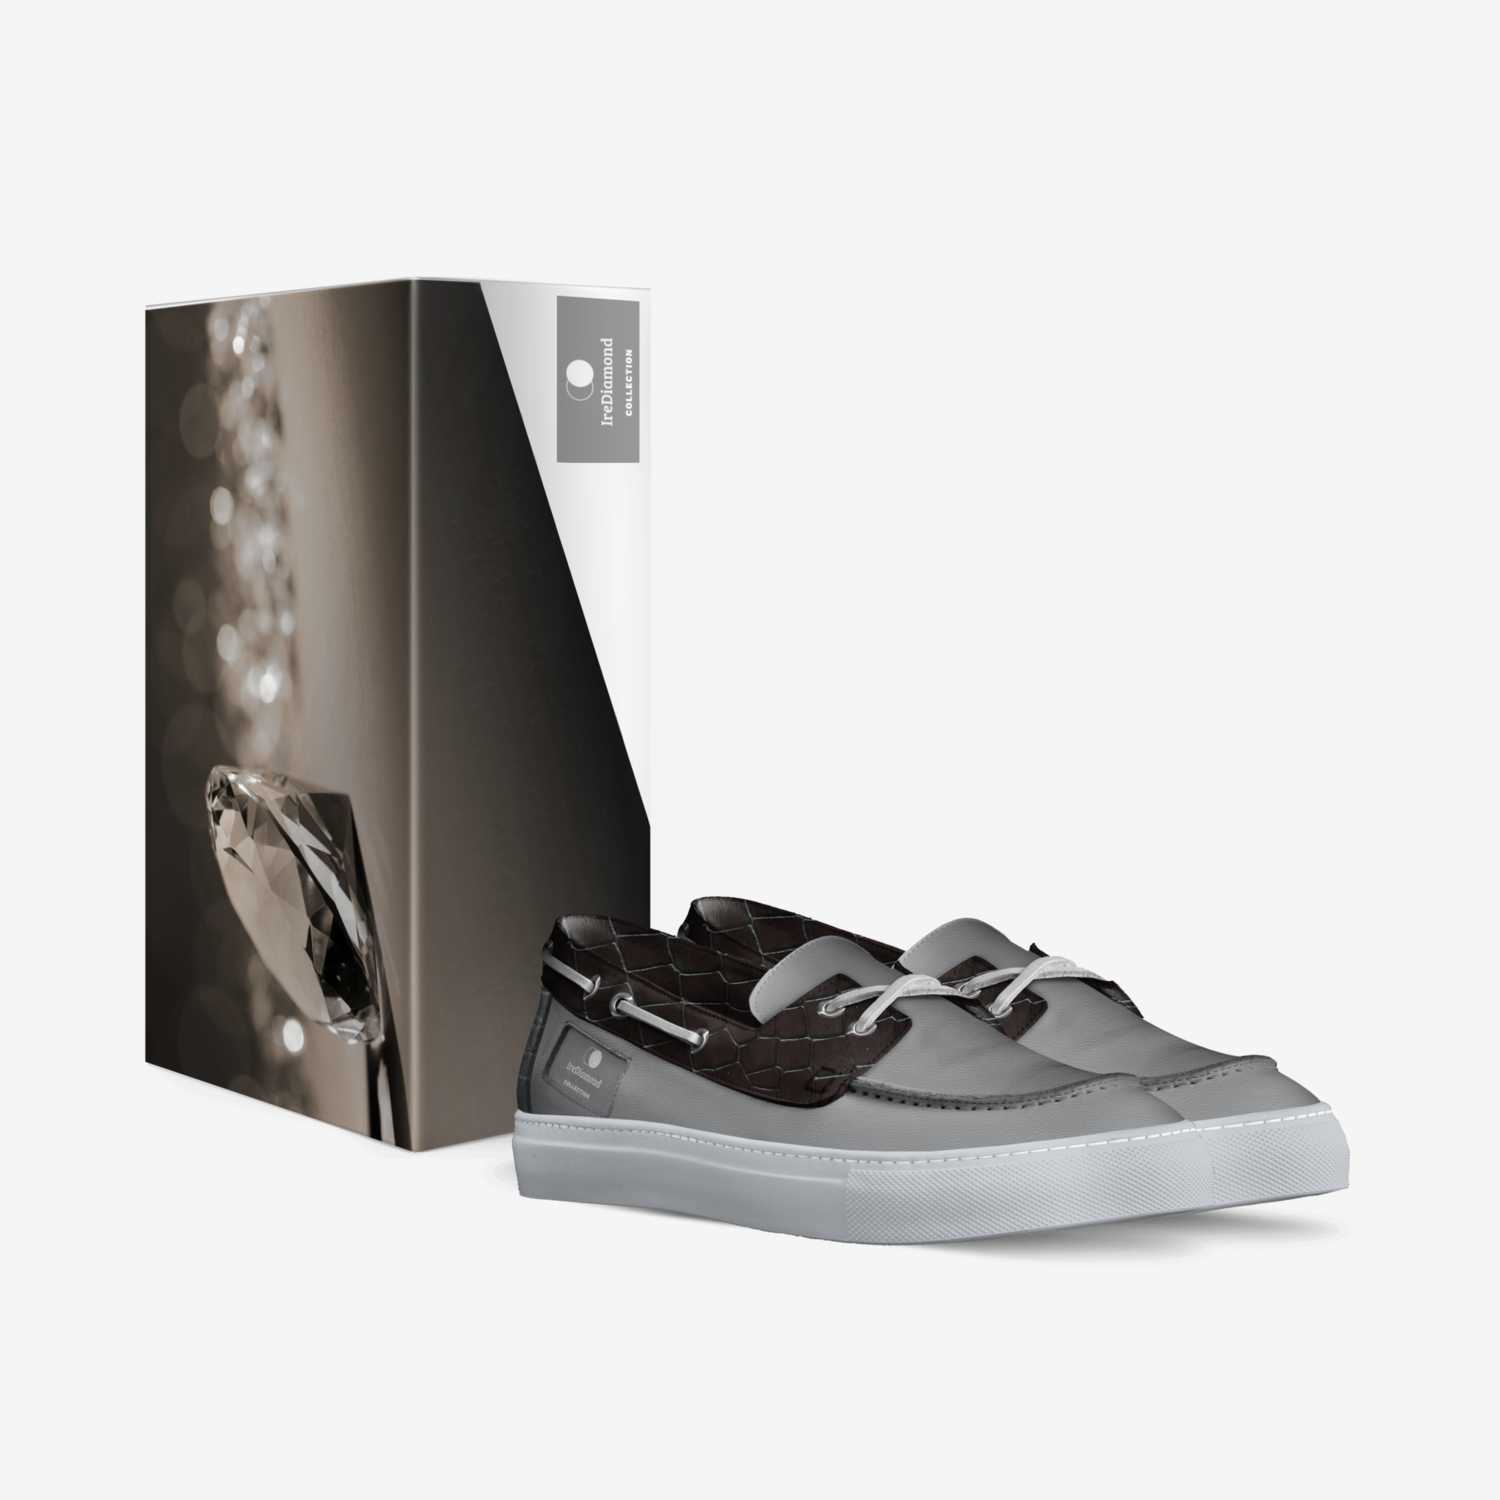 IreDiamond custom made in Italy shoes by Irediamond Hospitality | Box view